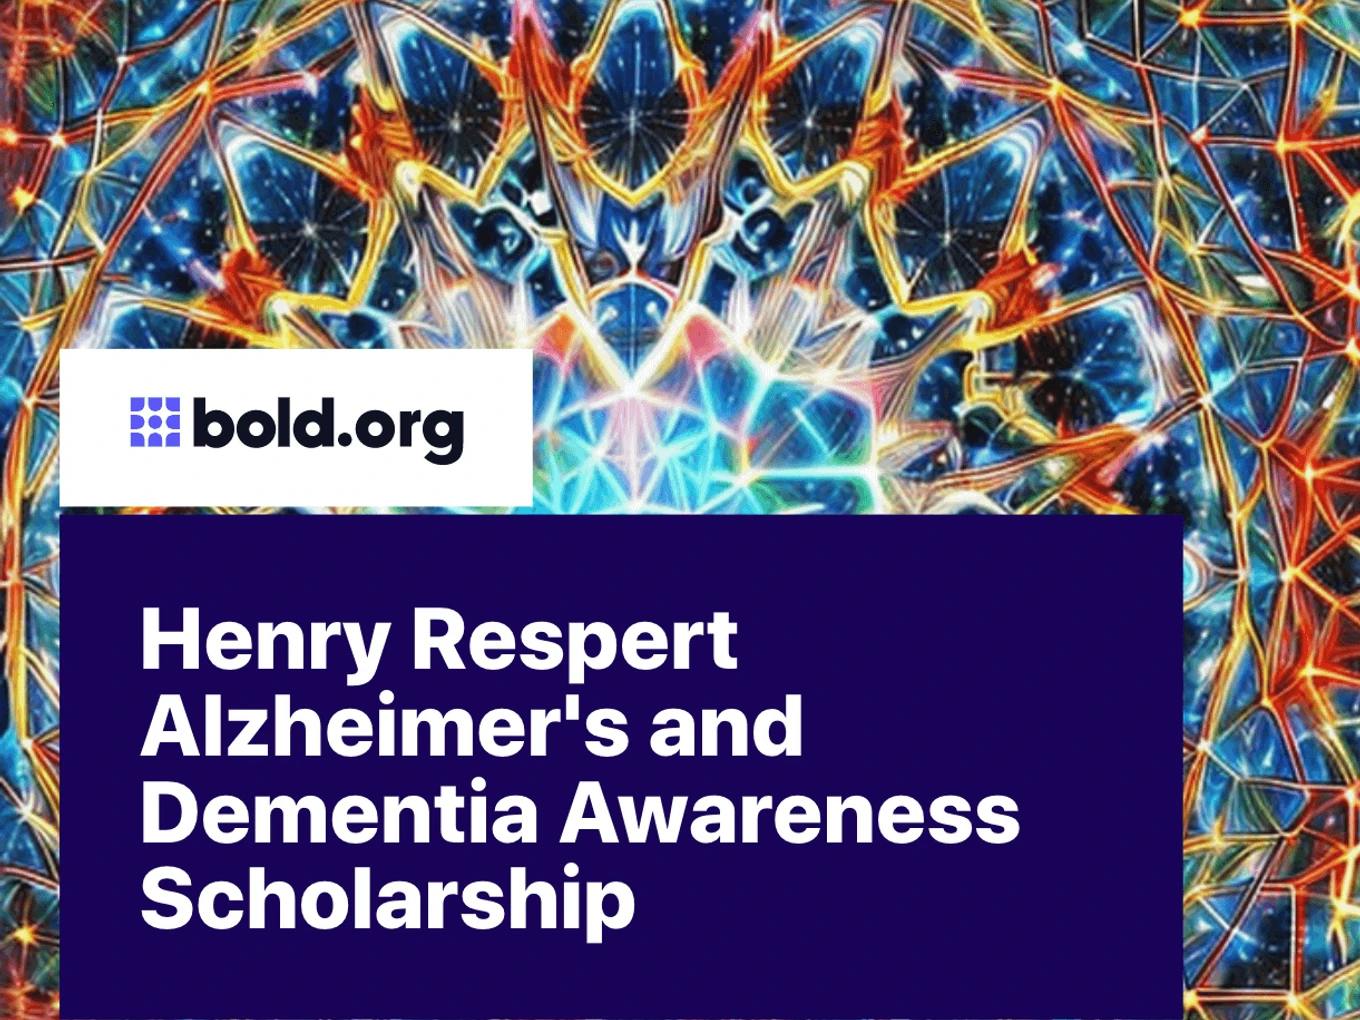 Henry Respert Alzheimer's and Dementia Awareness Scholarship